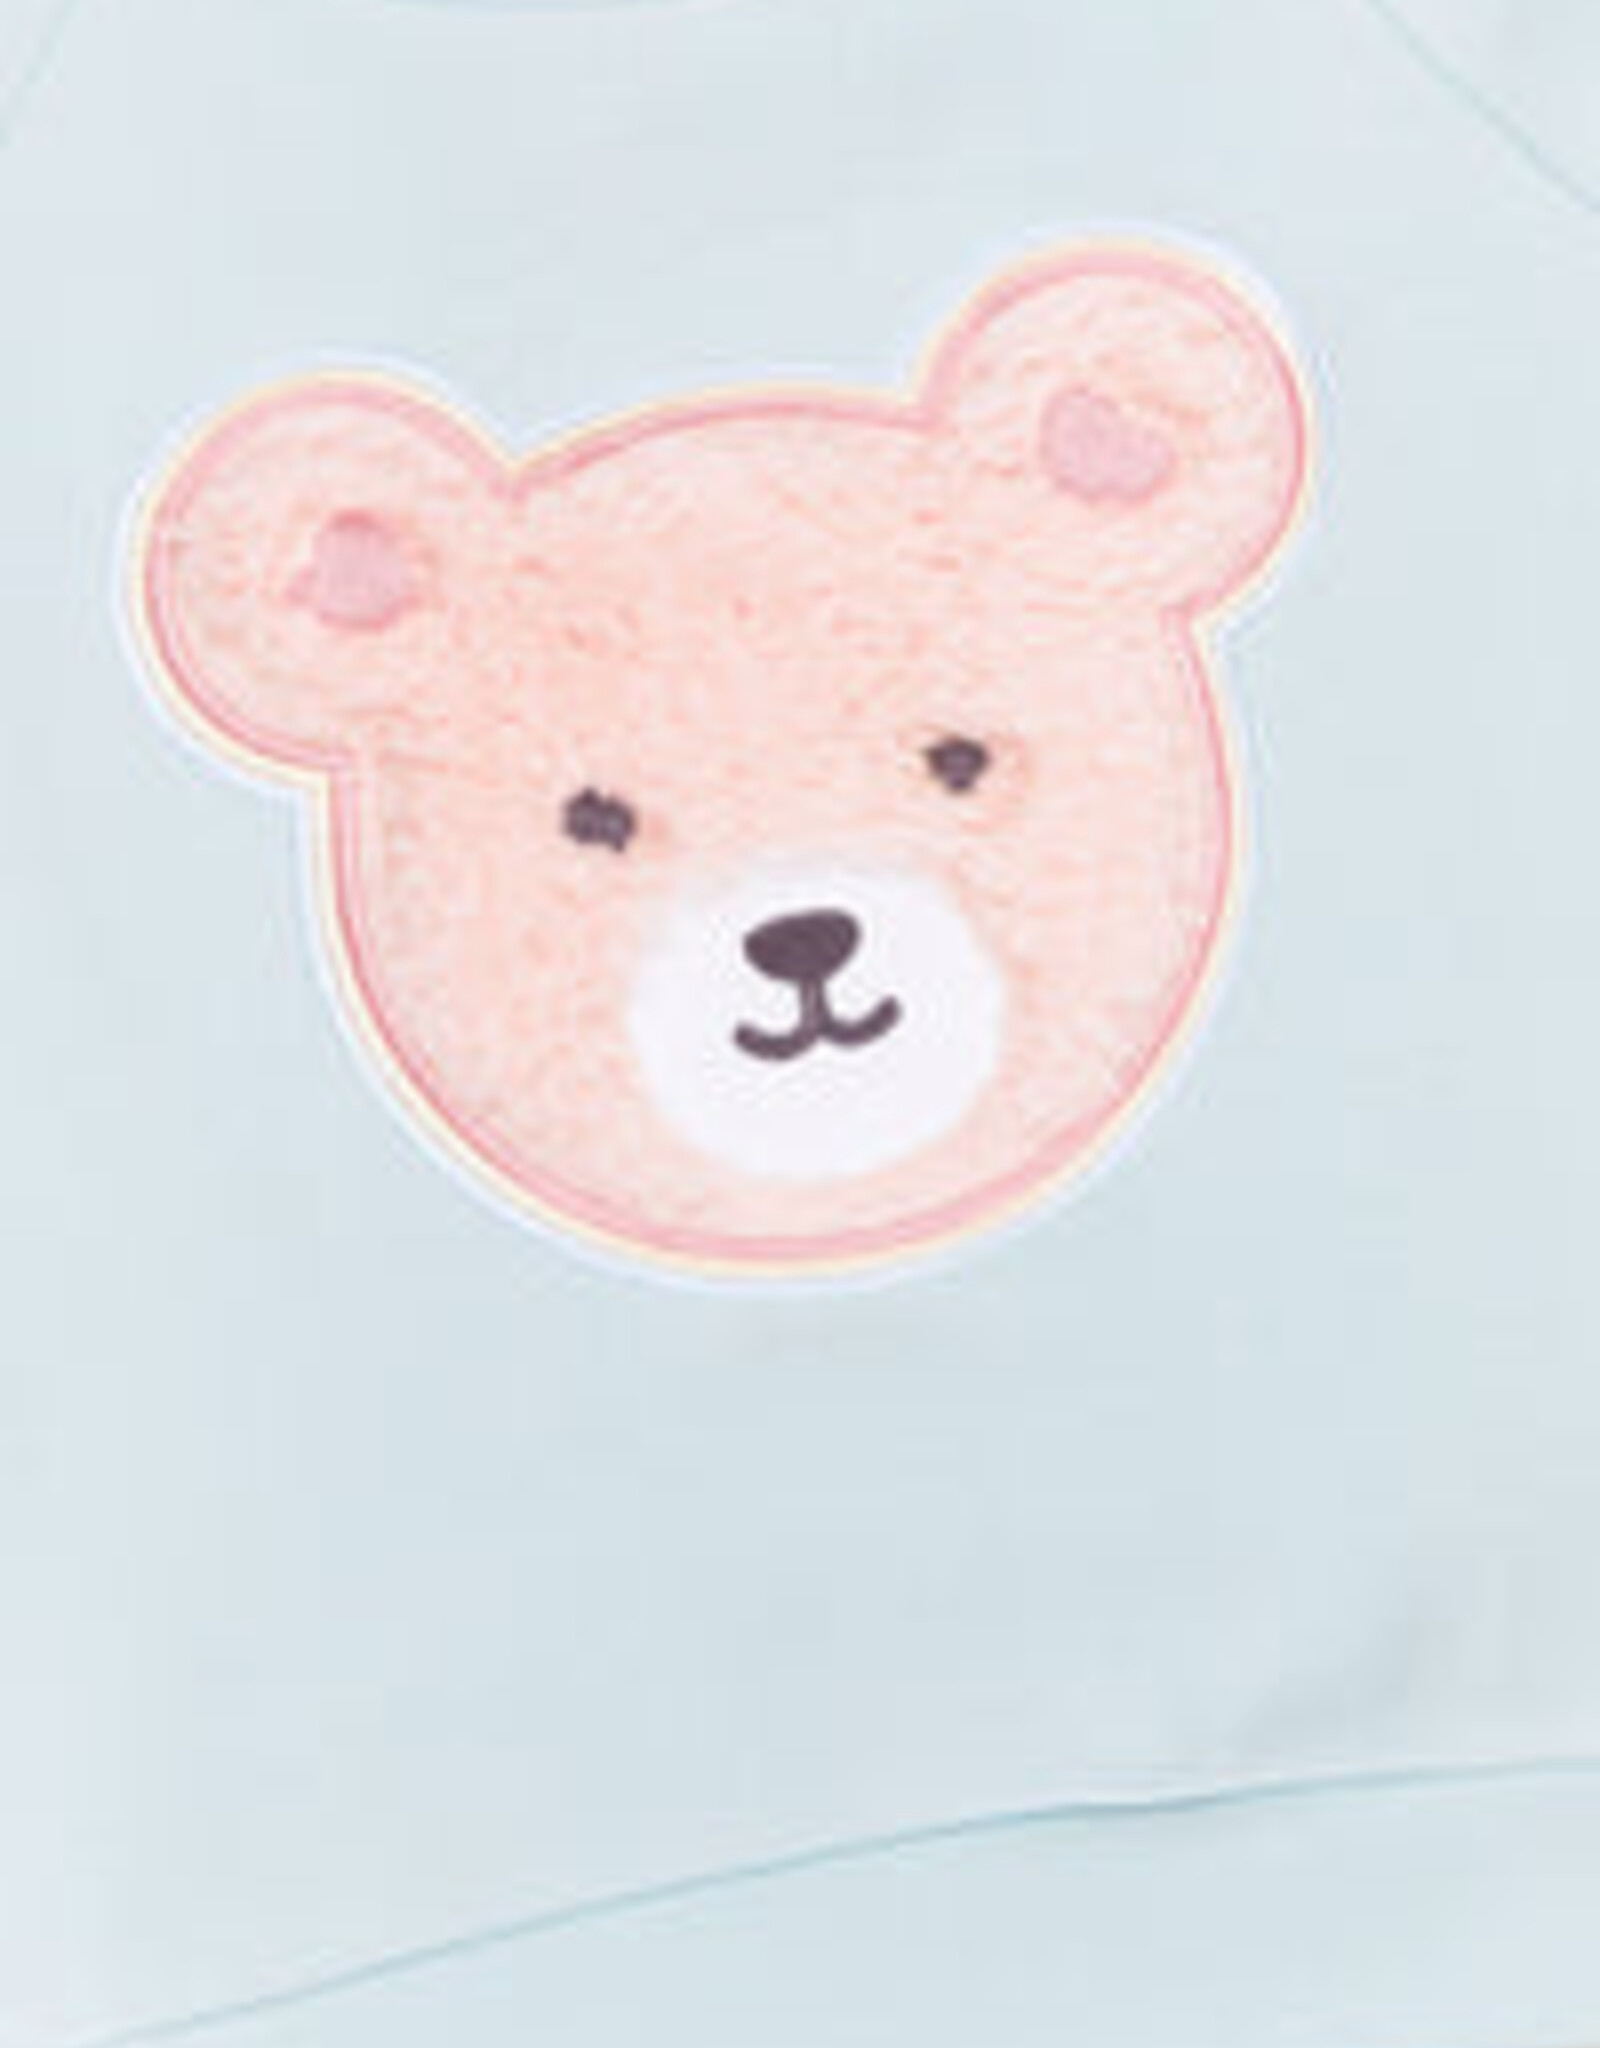 Huxbaby Huxbaby - Furry Heart Bear Sweatshirt